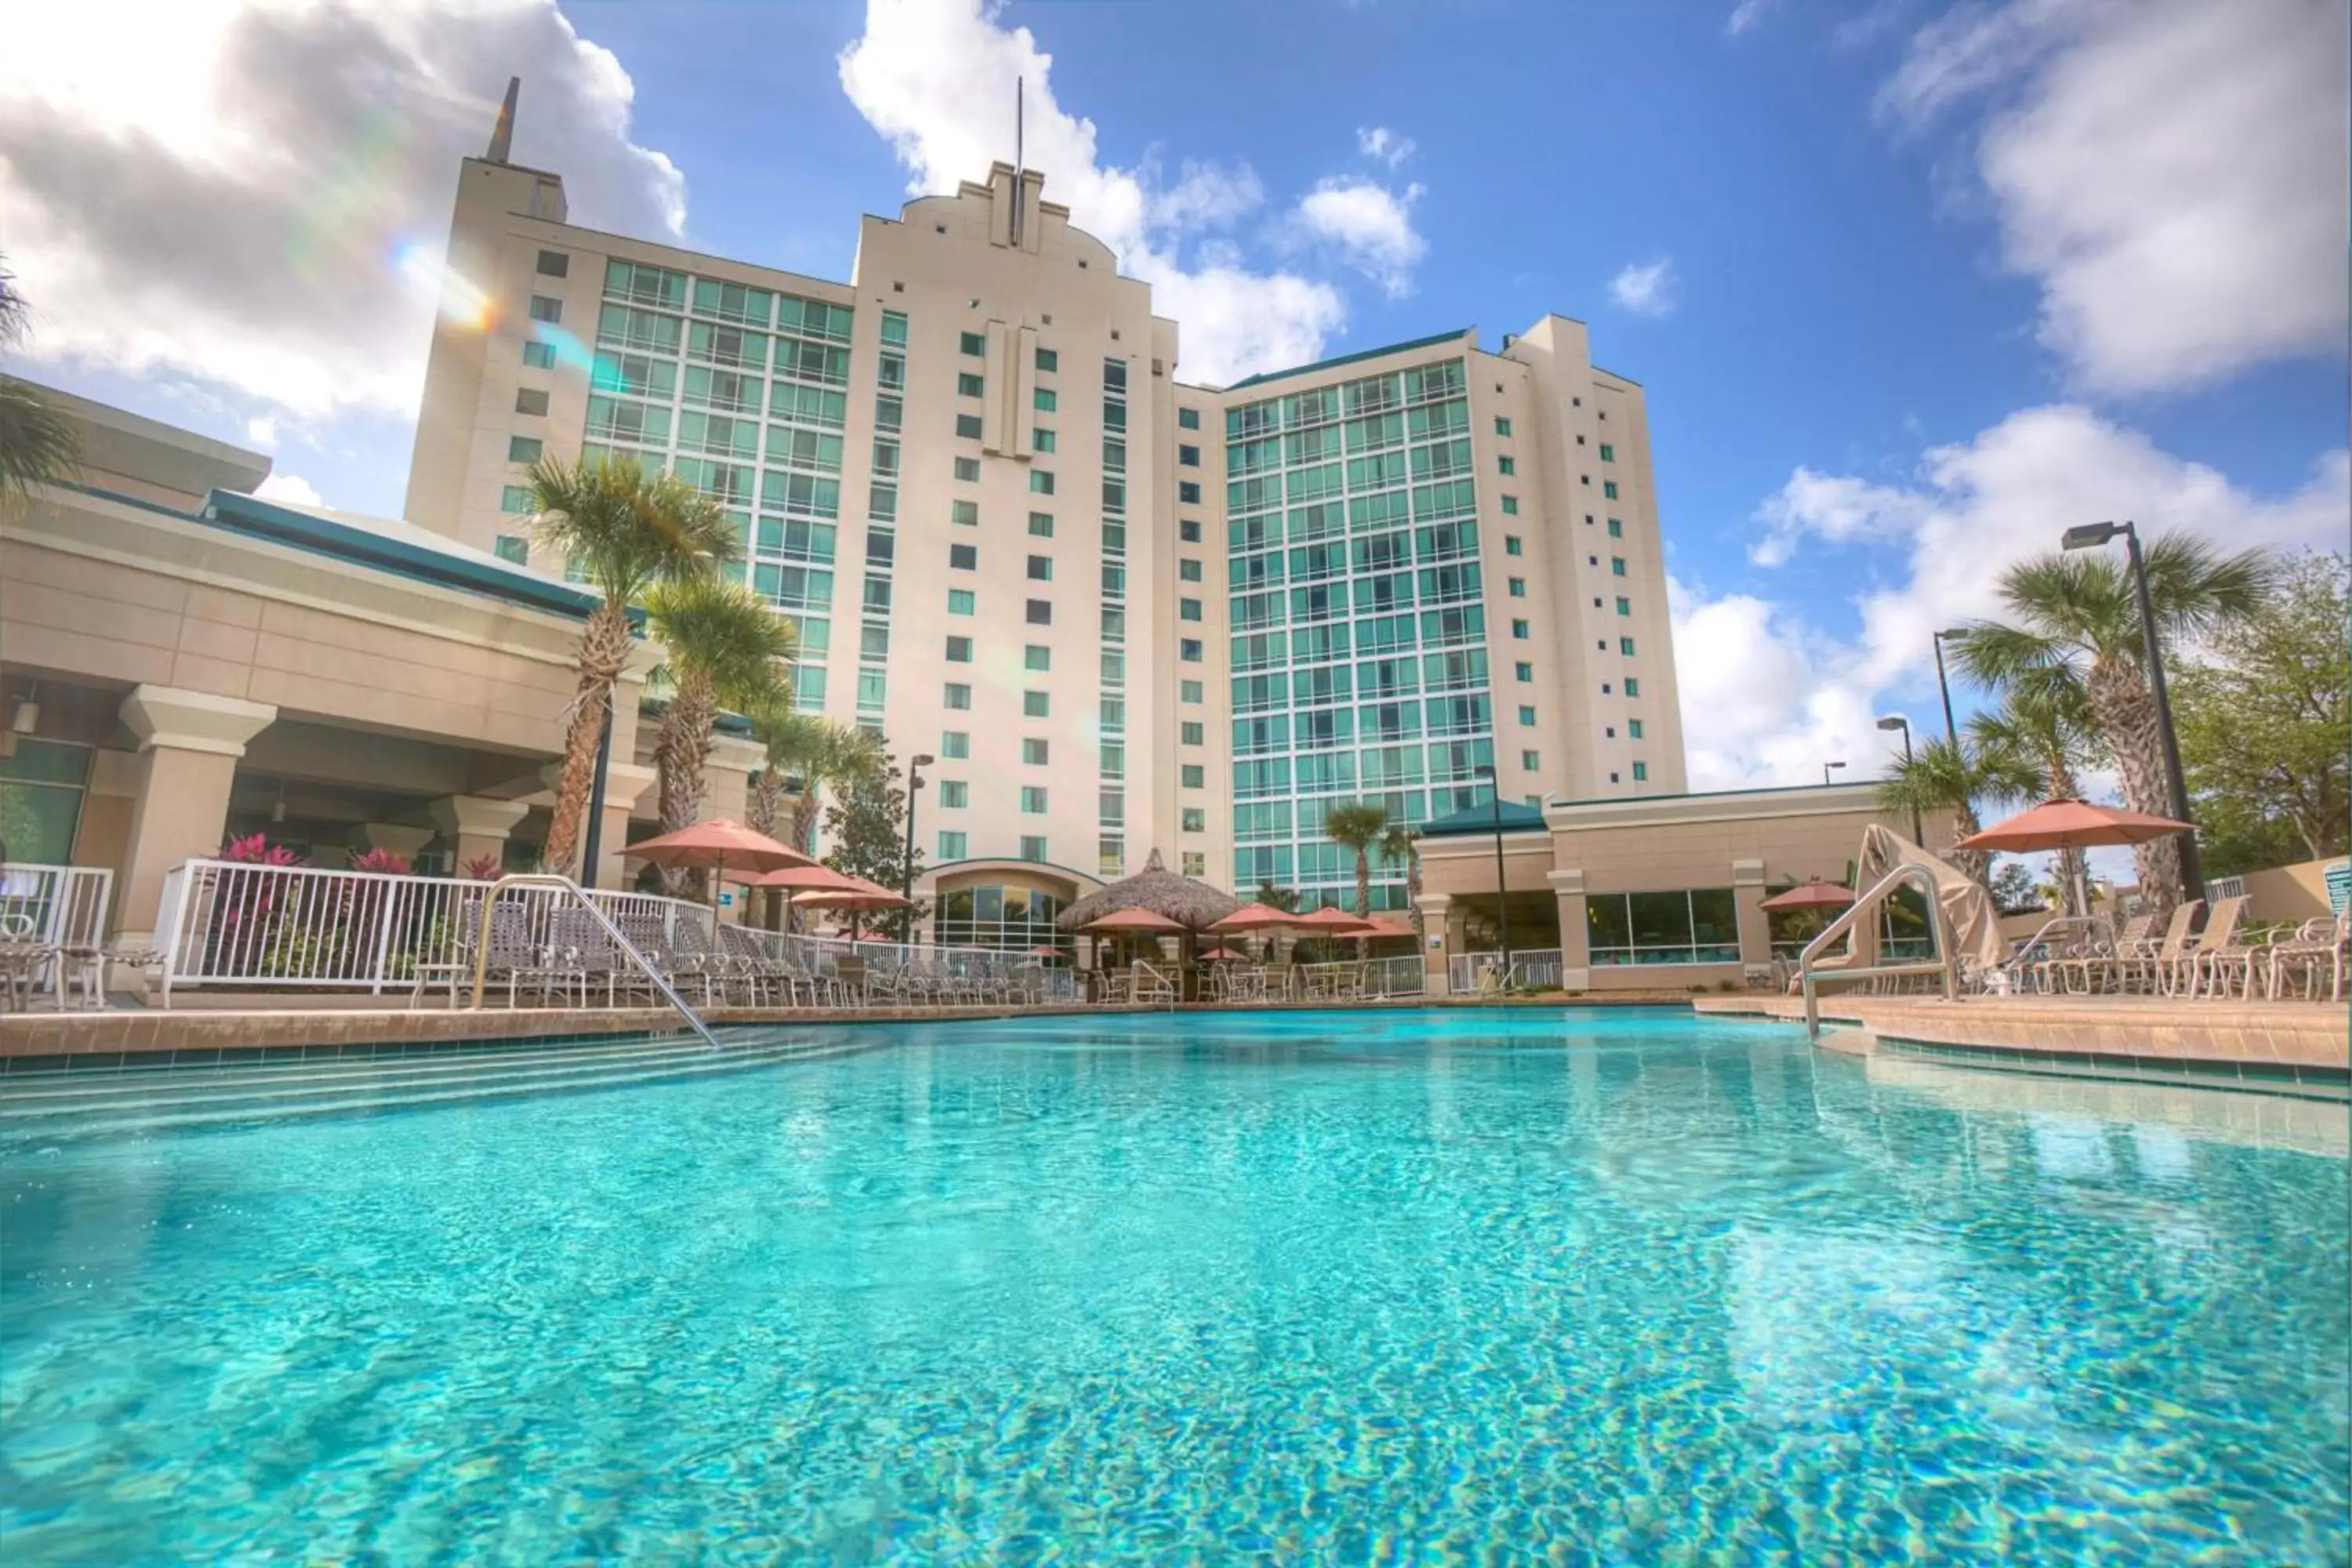 Swimming Pool in Hotel Kinetic Orlando Universal Blvd